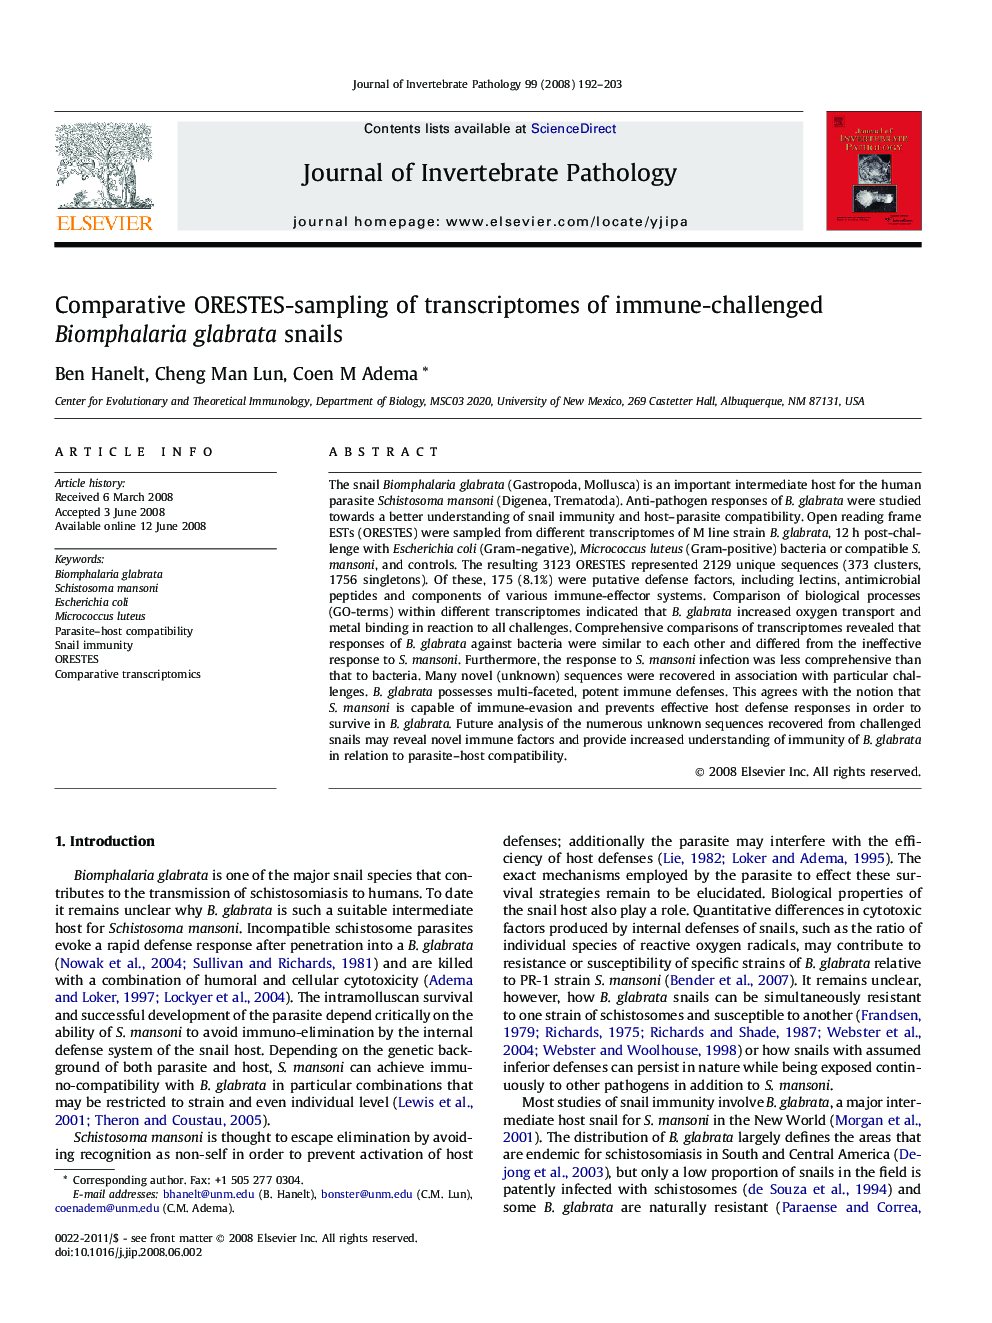 Comparative ORESTES-sampling of transcriptomes of immune-challenged Biomphalaria glabrata snails